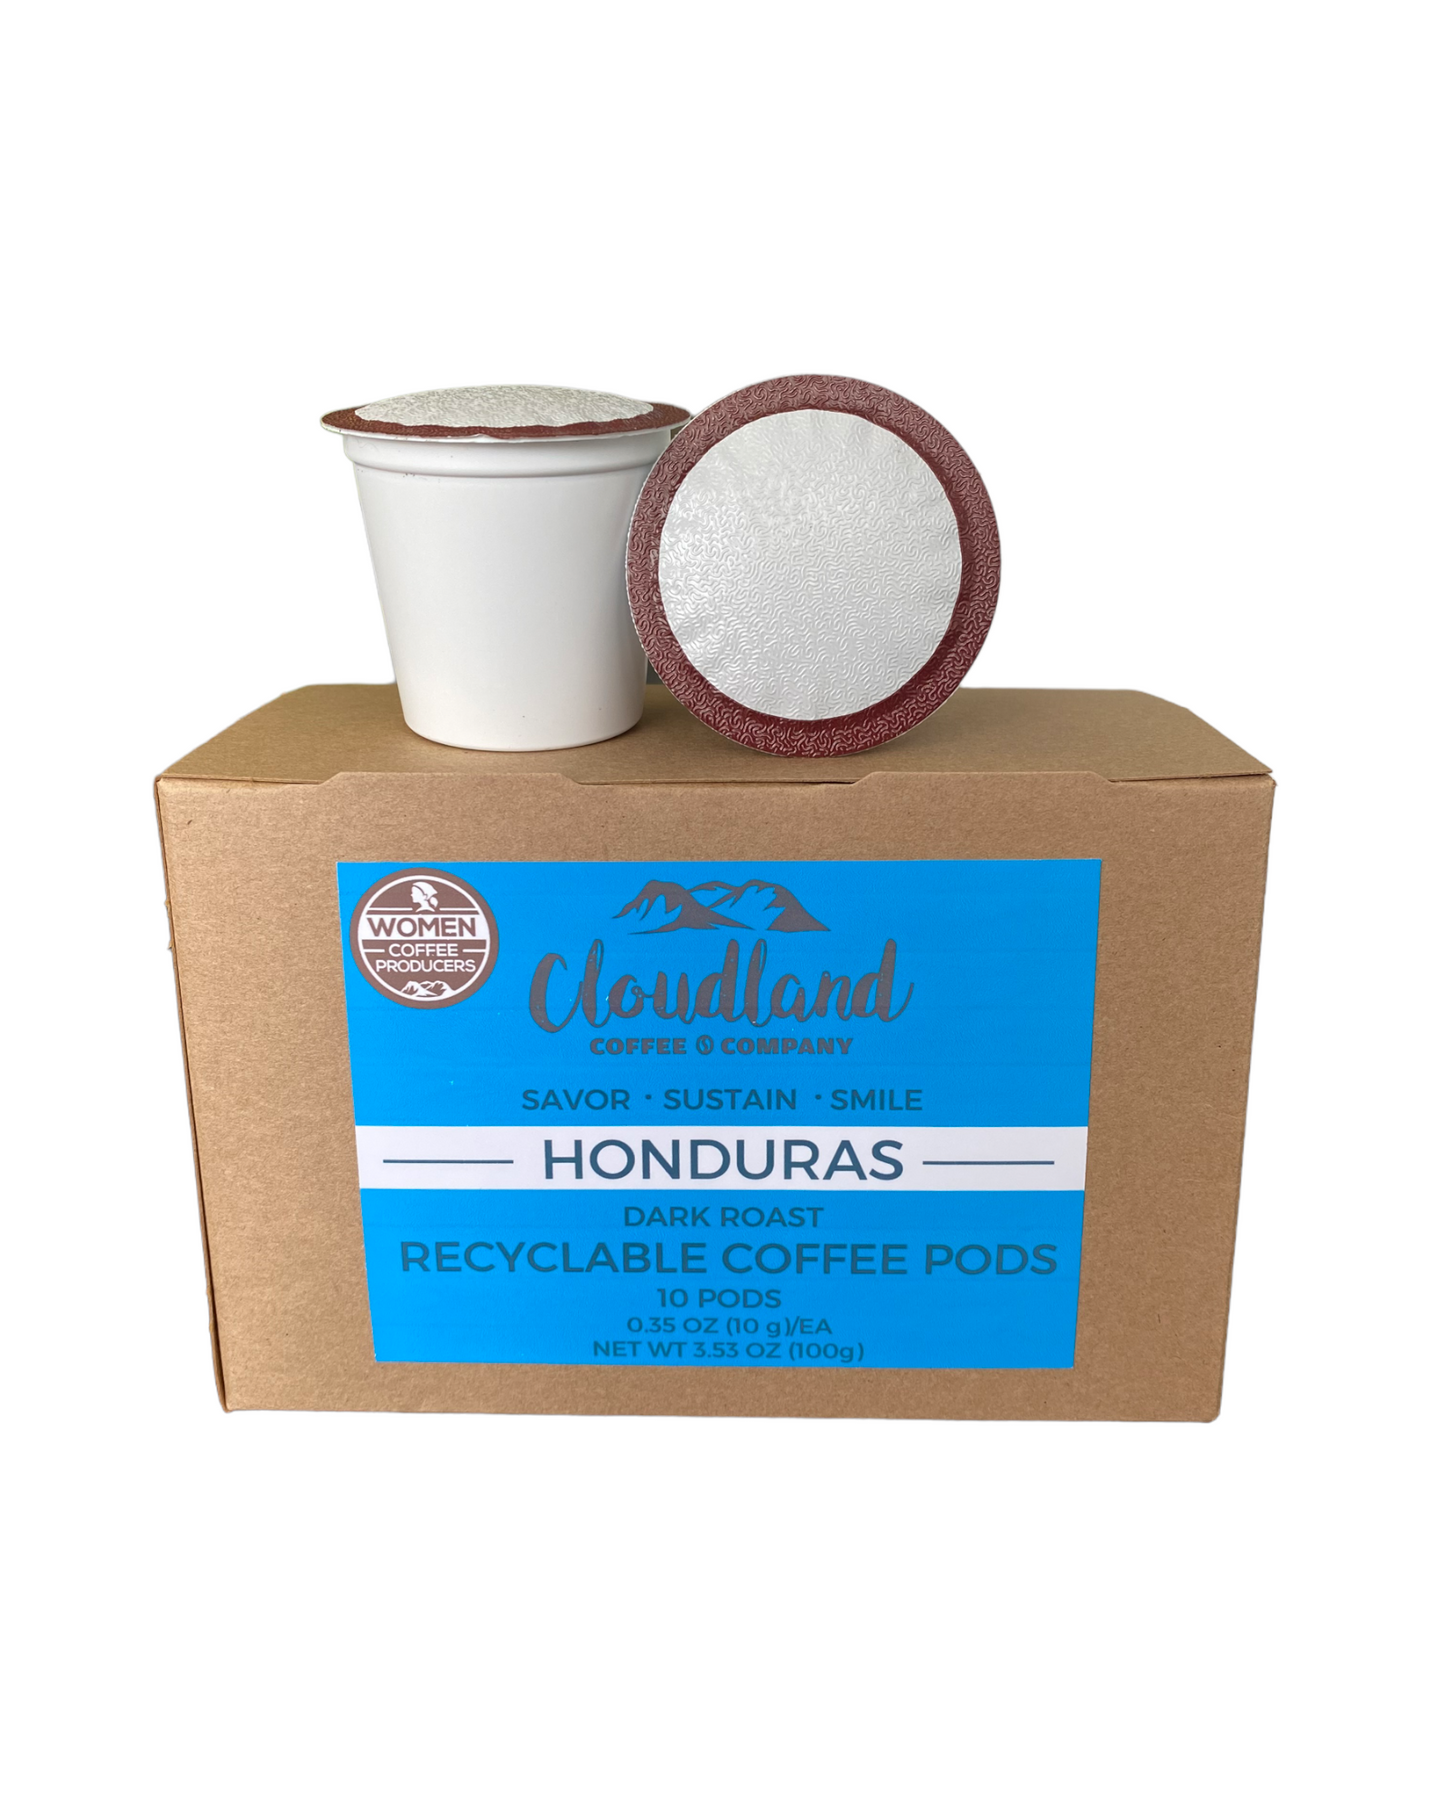 Honduras Recyclable Coffee Pods